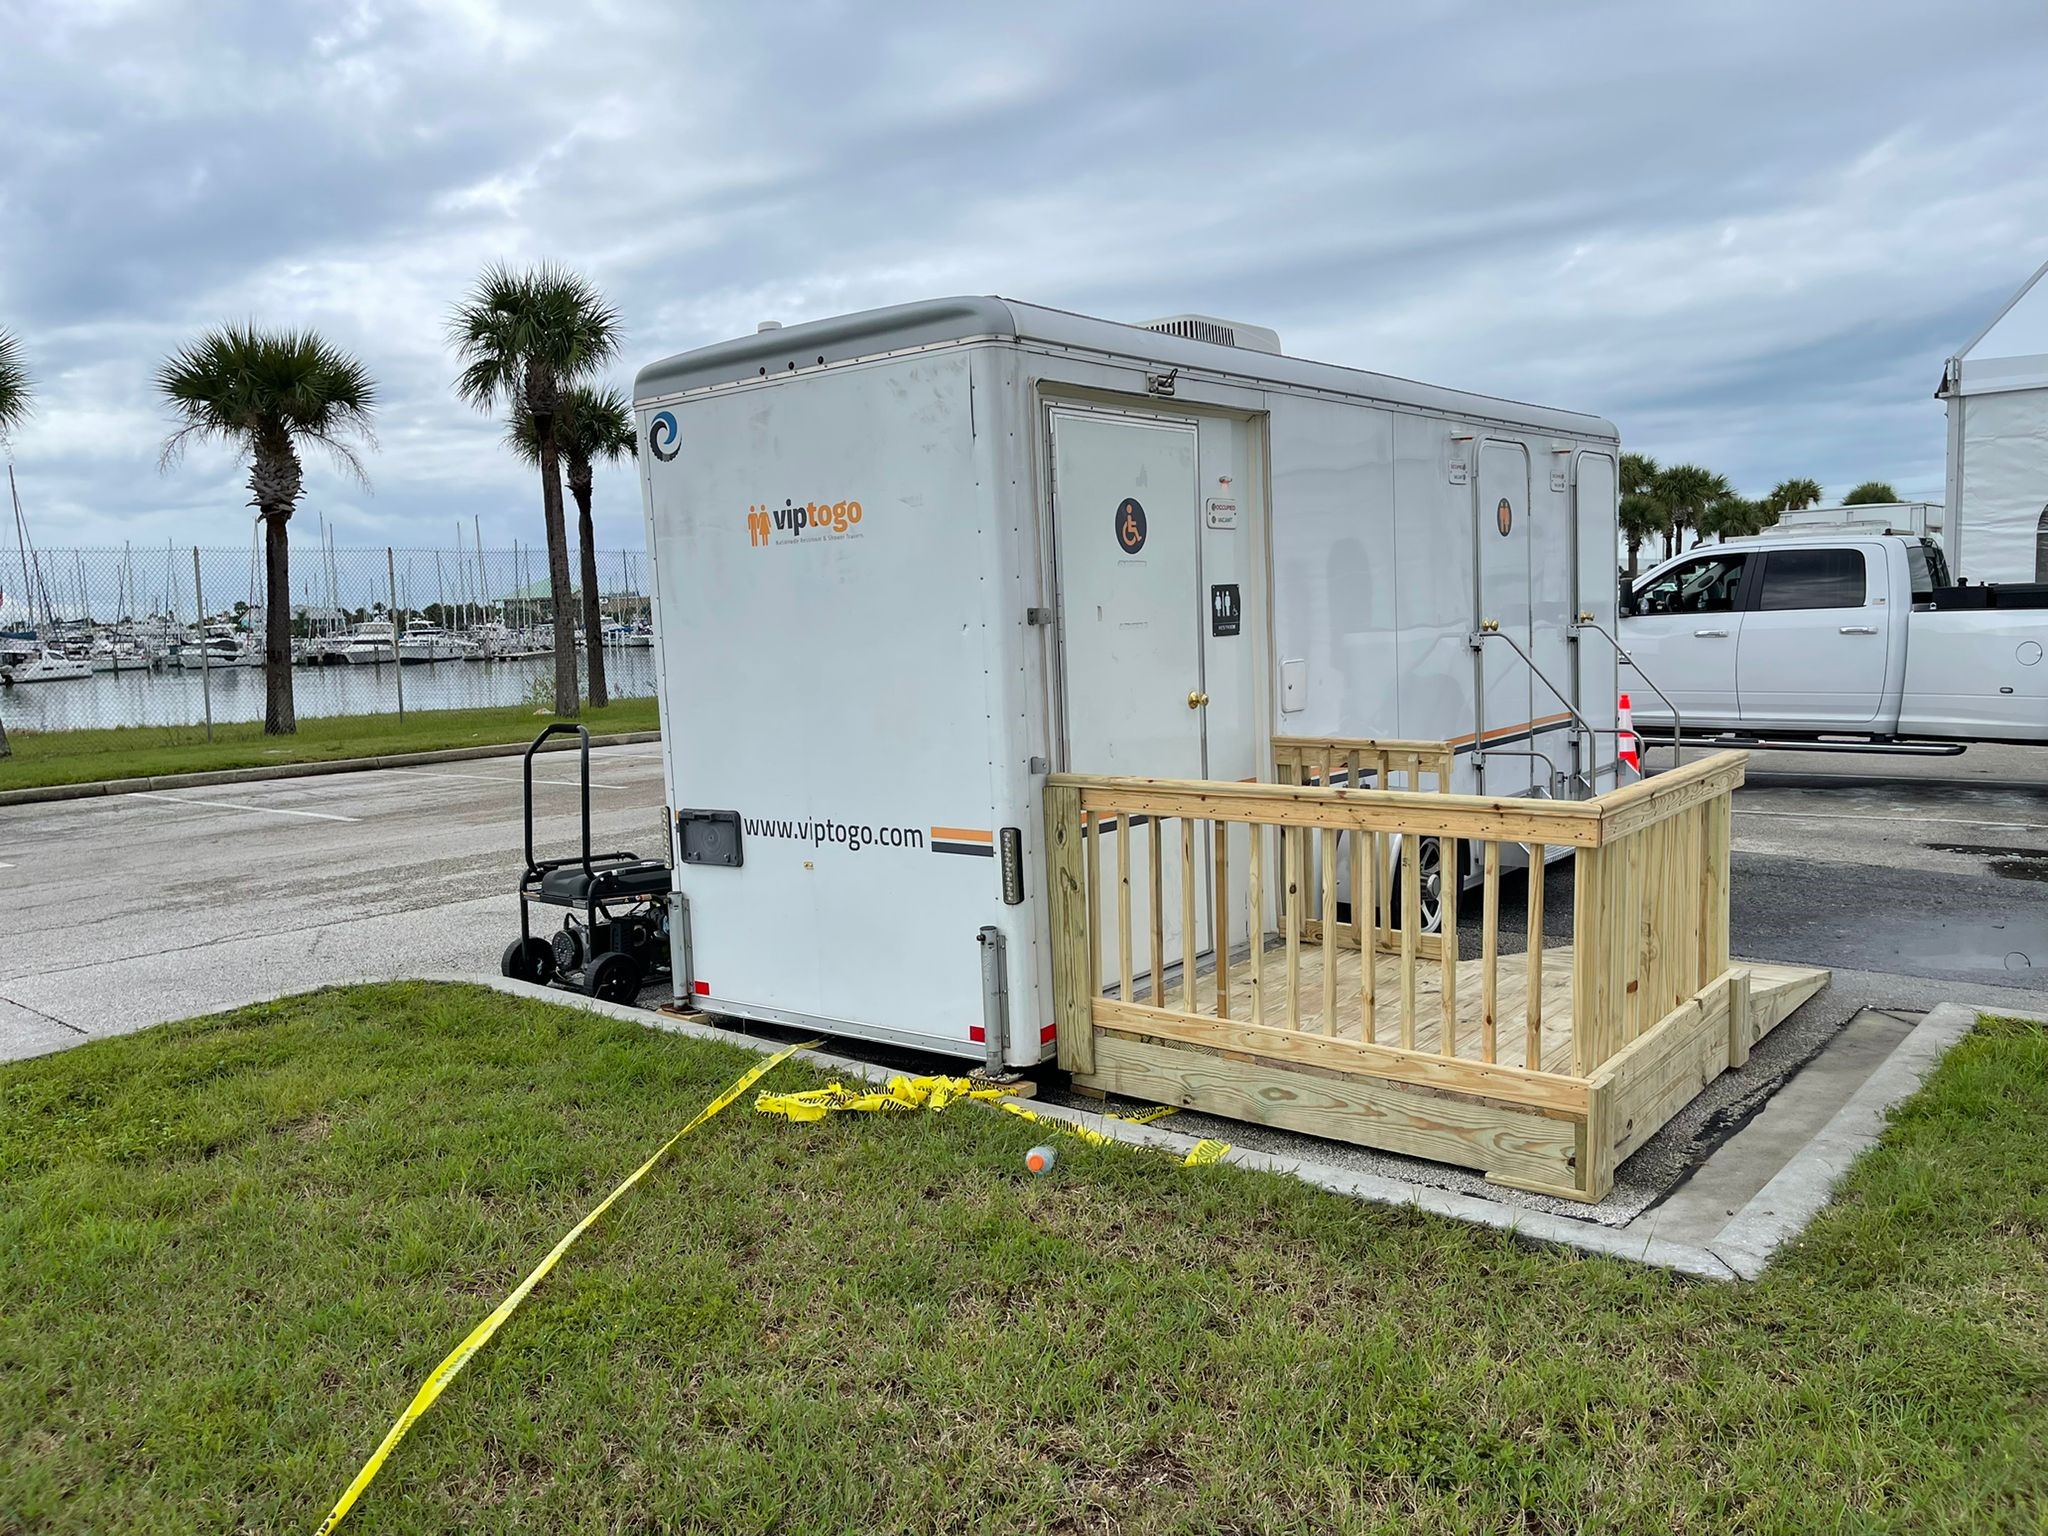 ADA handicap accessible mobile restroom trailer at Florida event